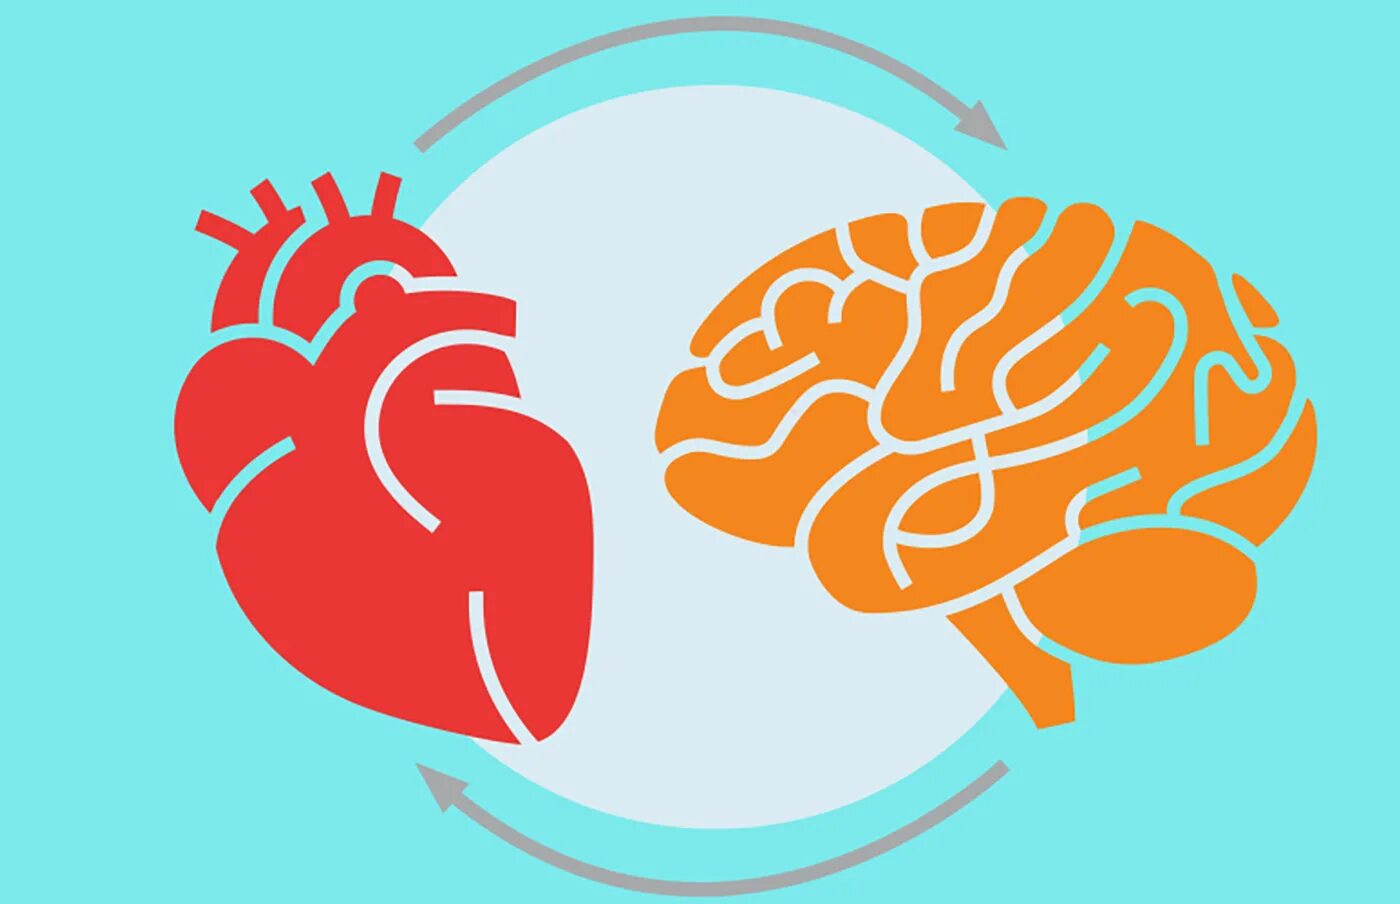 Мозг и сердце. Мозг и сердце логотип. Сердце и мозг взаимосвязь. Мозги и сердце.